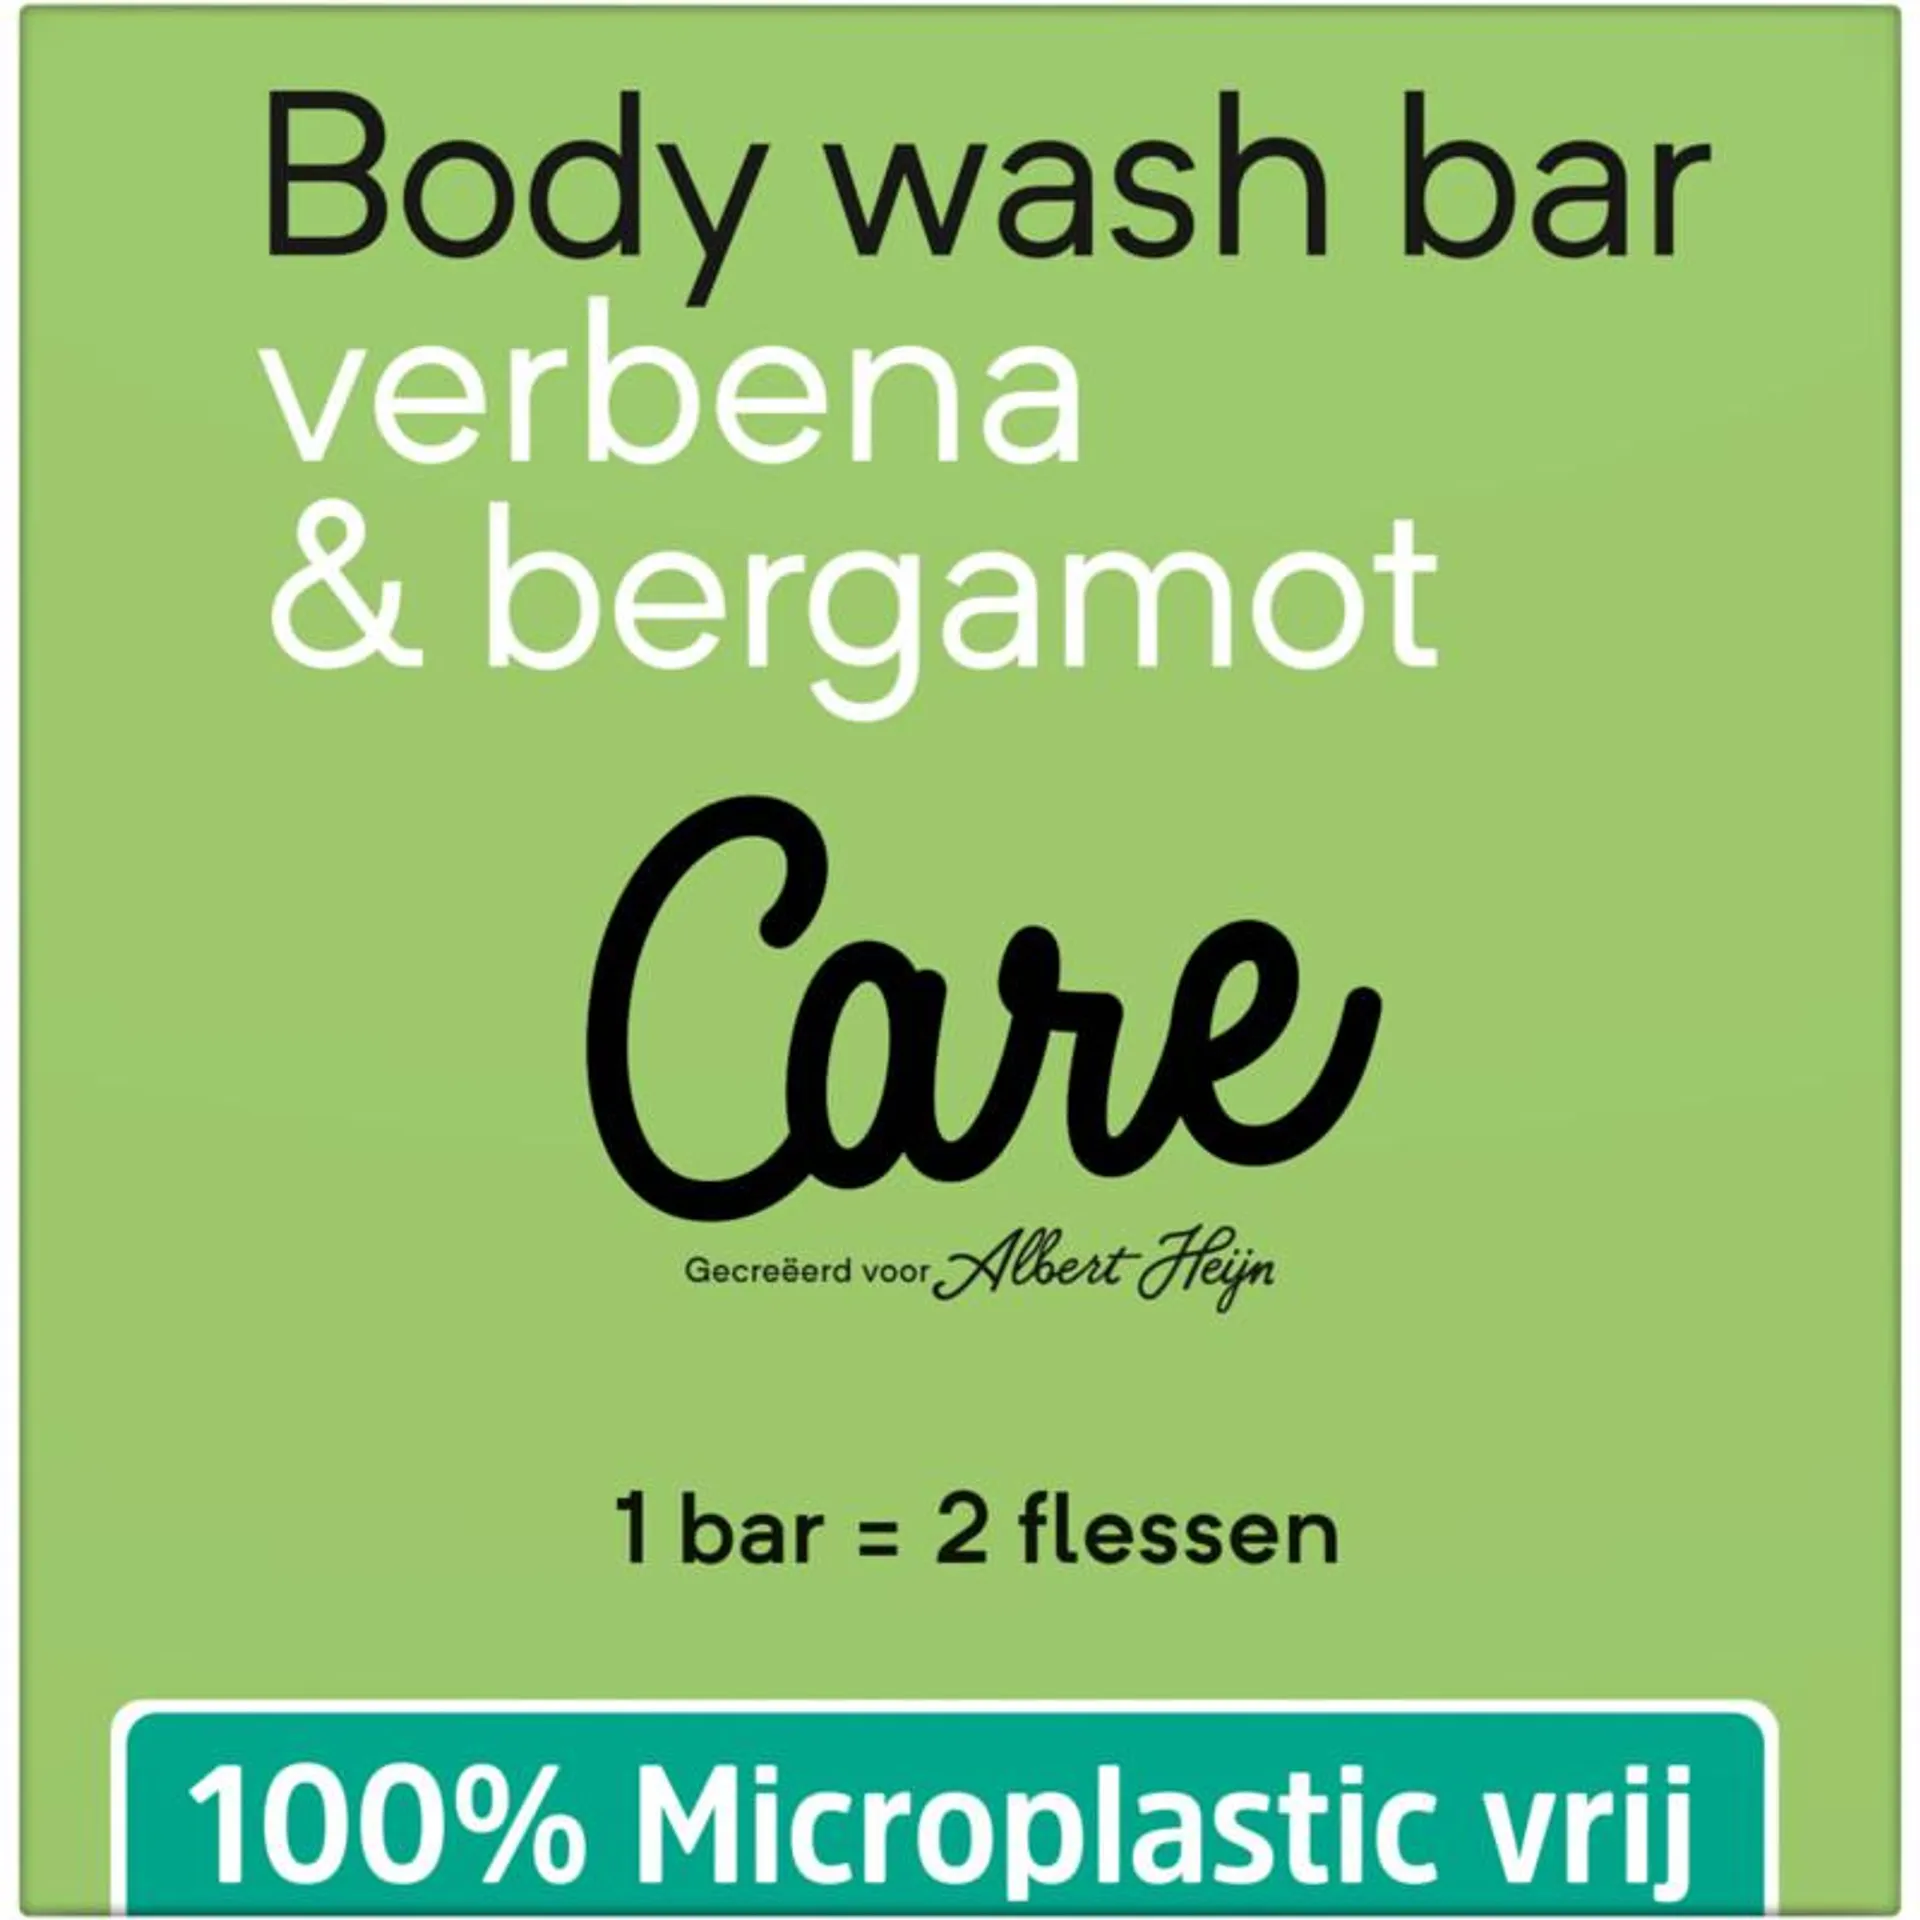 Care Body wash bar verbena & bergamot